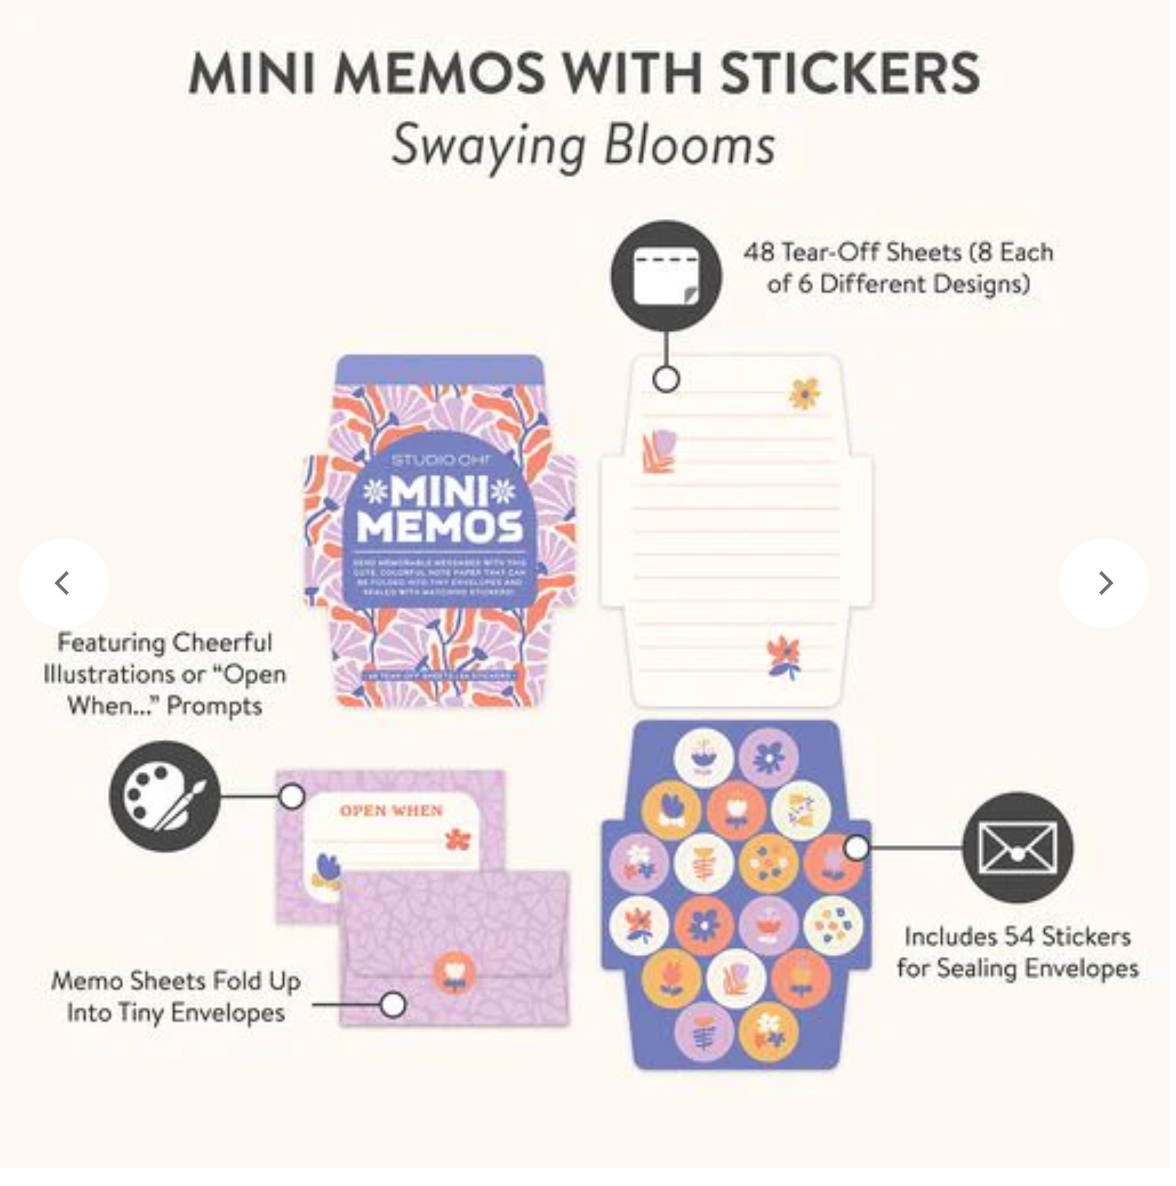 Mini Memos with Stickers